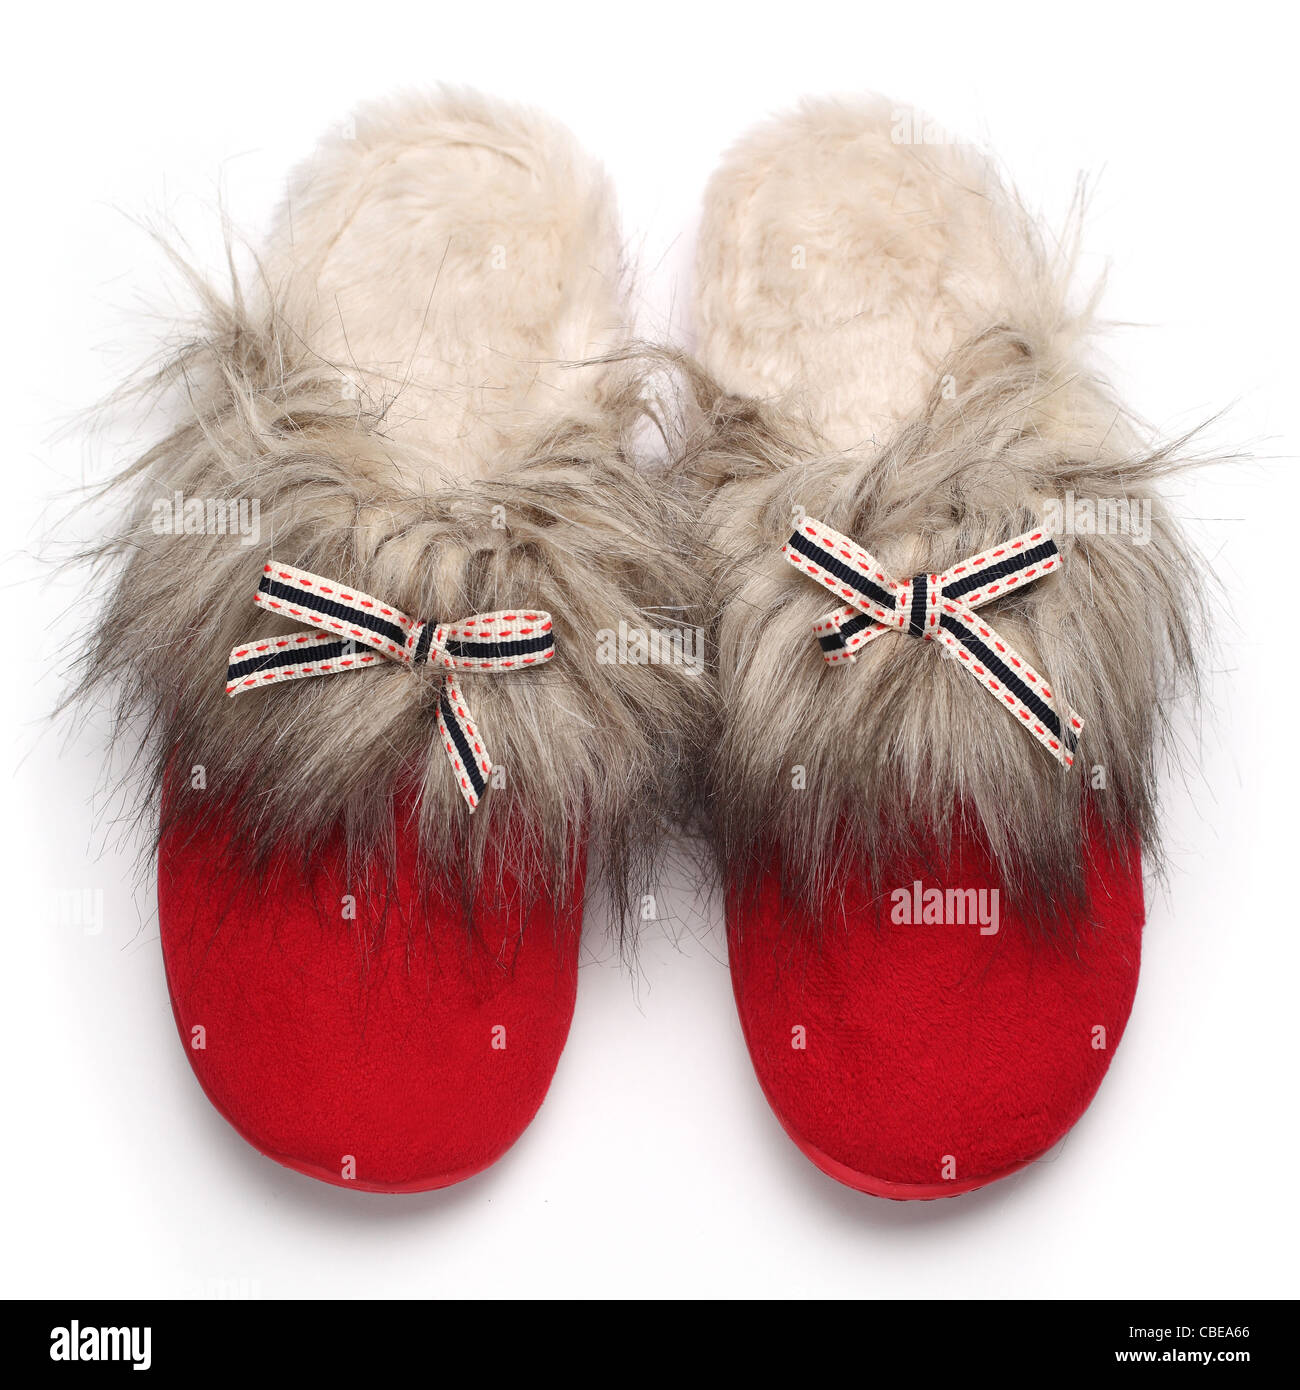 slippers Stock Photo